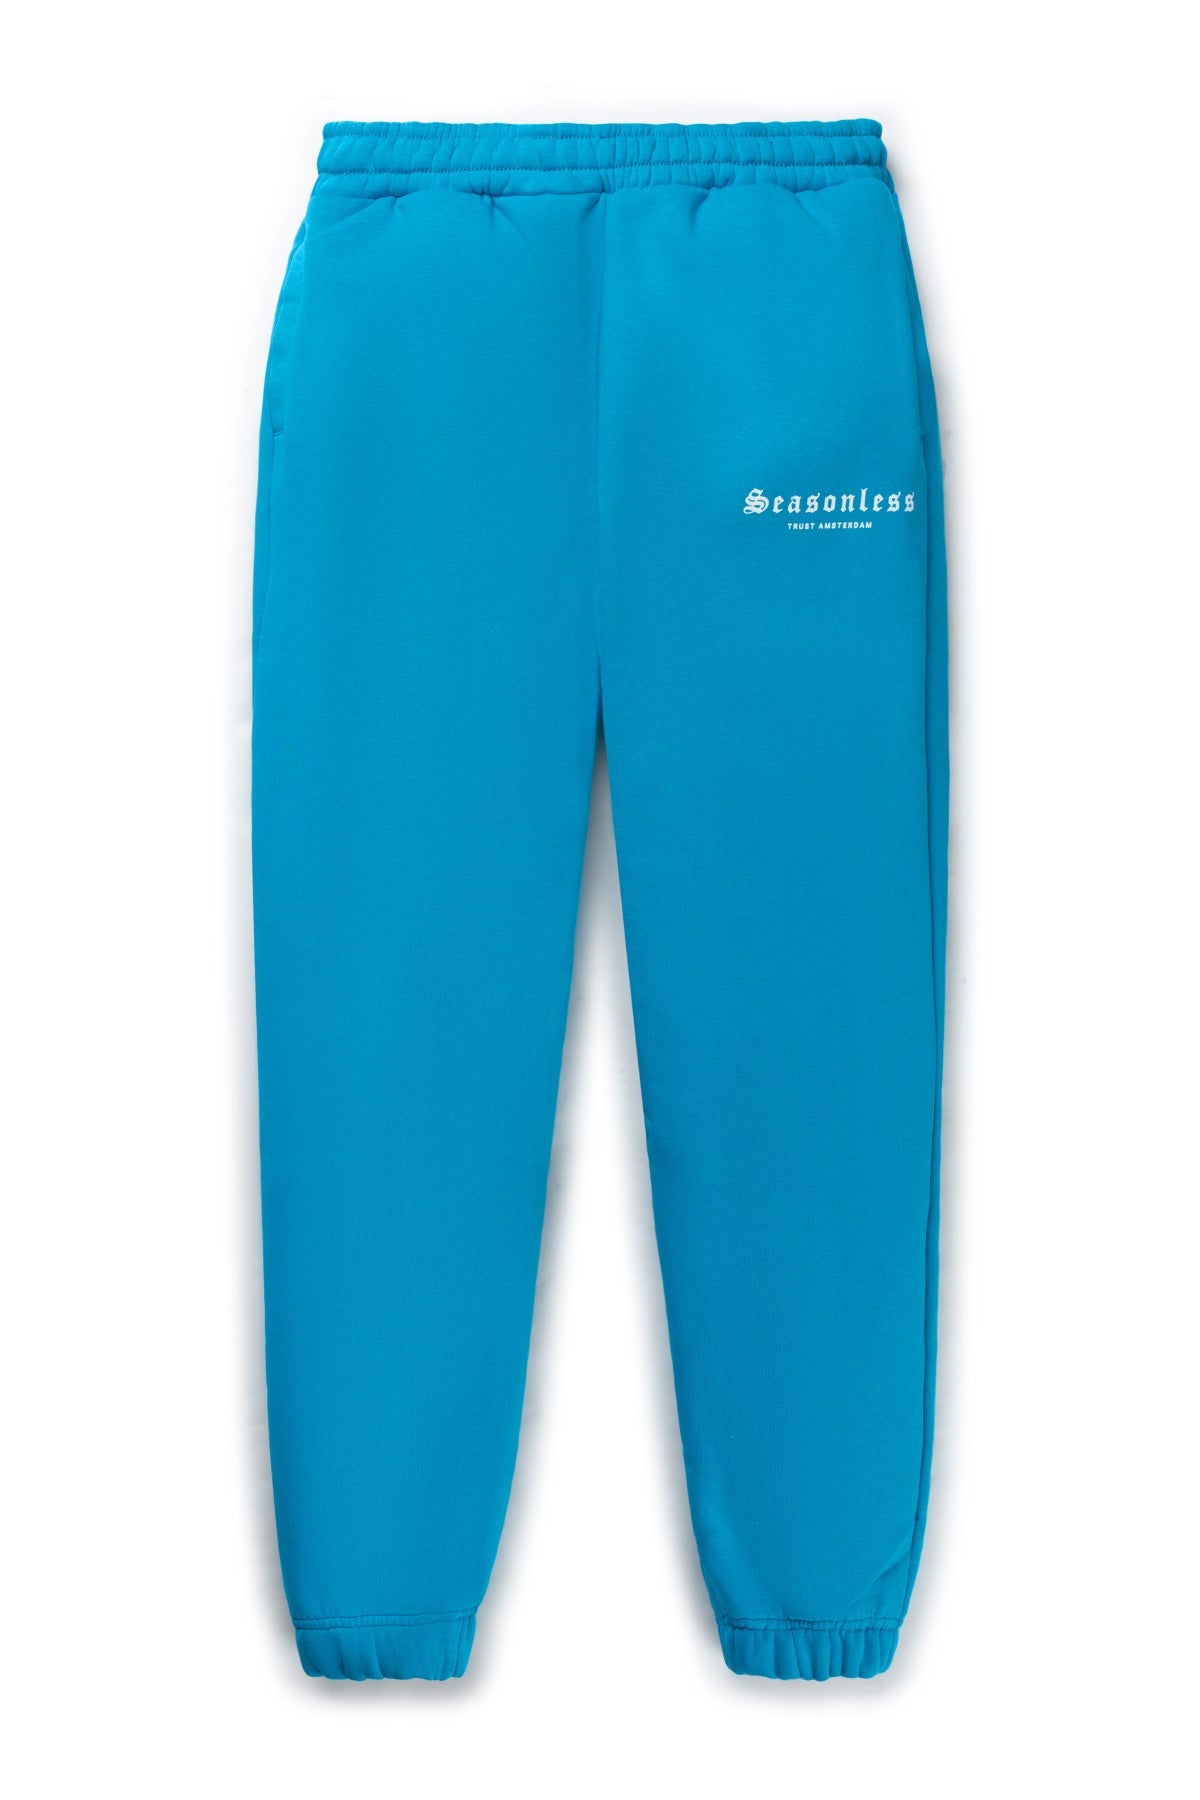 Seasonless Sweatpants - Light Blue